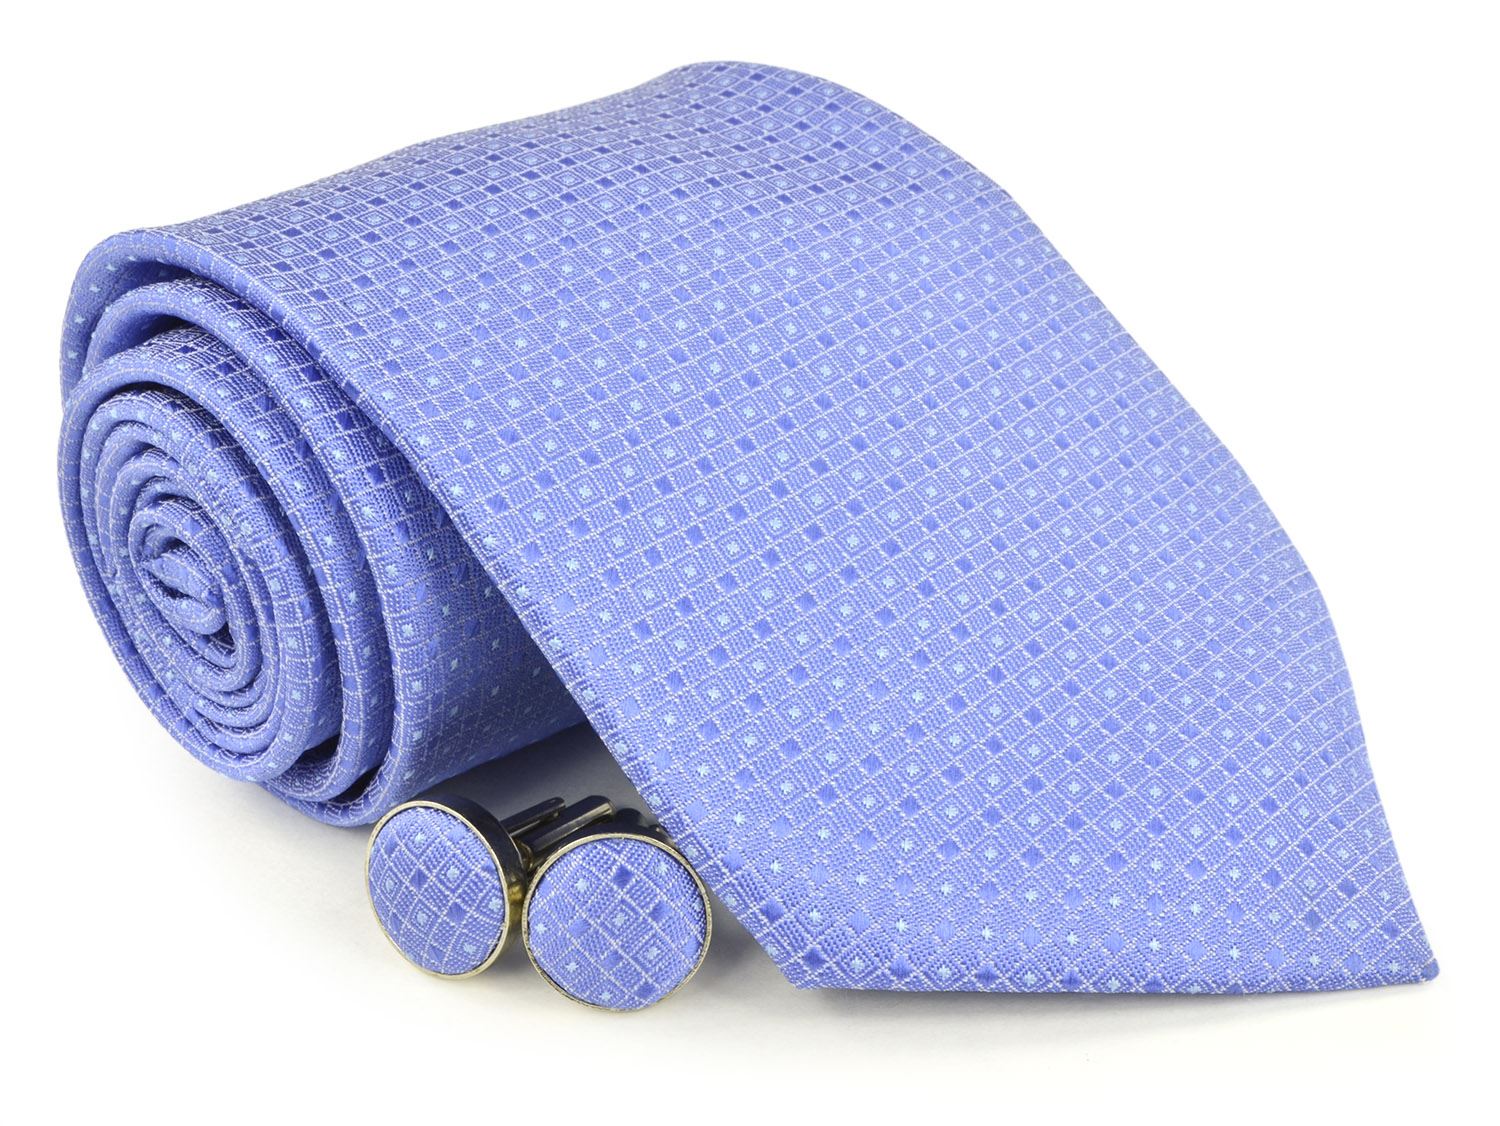 Moda Di Raza Men's NeckTies - 3 Inch Tie - Gift Box Sets - LightBlue Tie With Cuff-link In Box